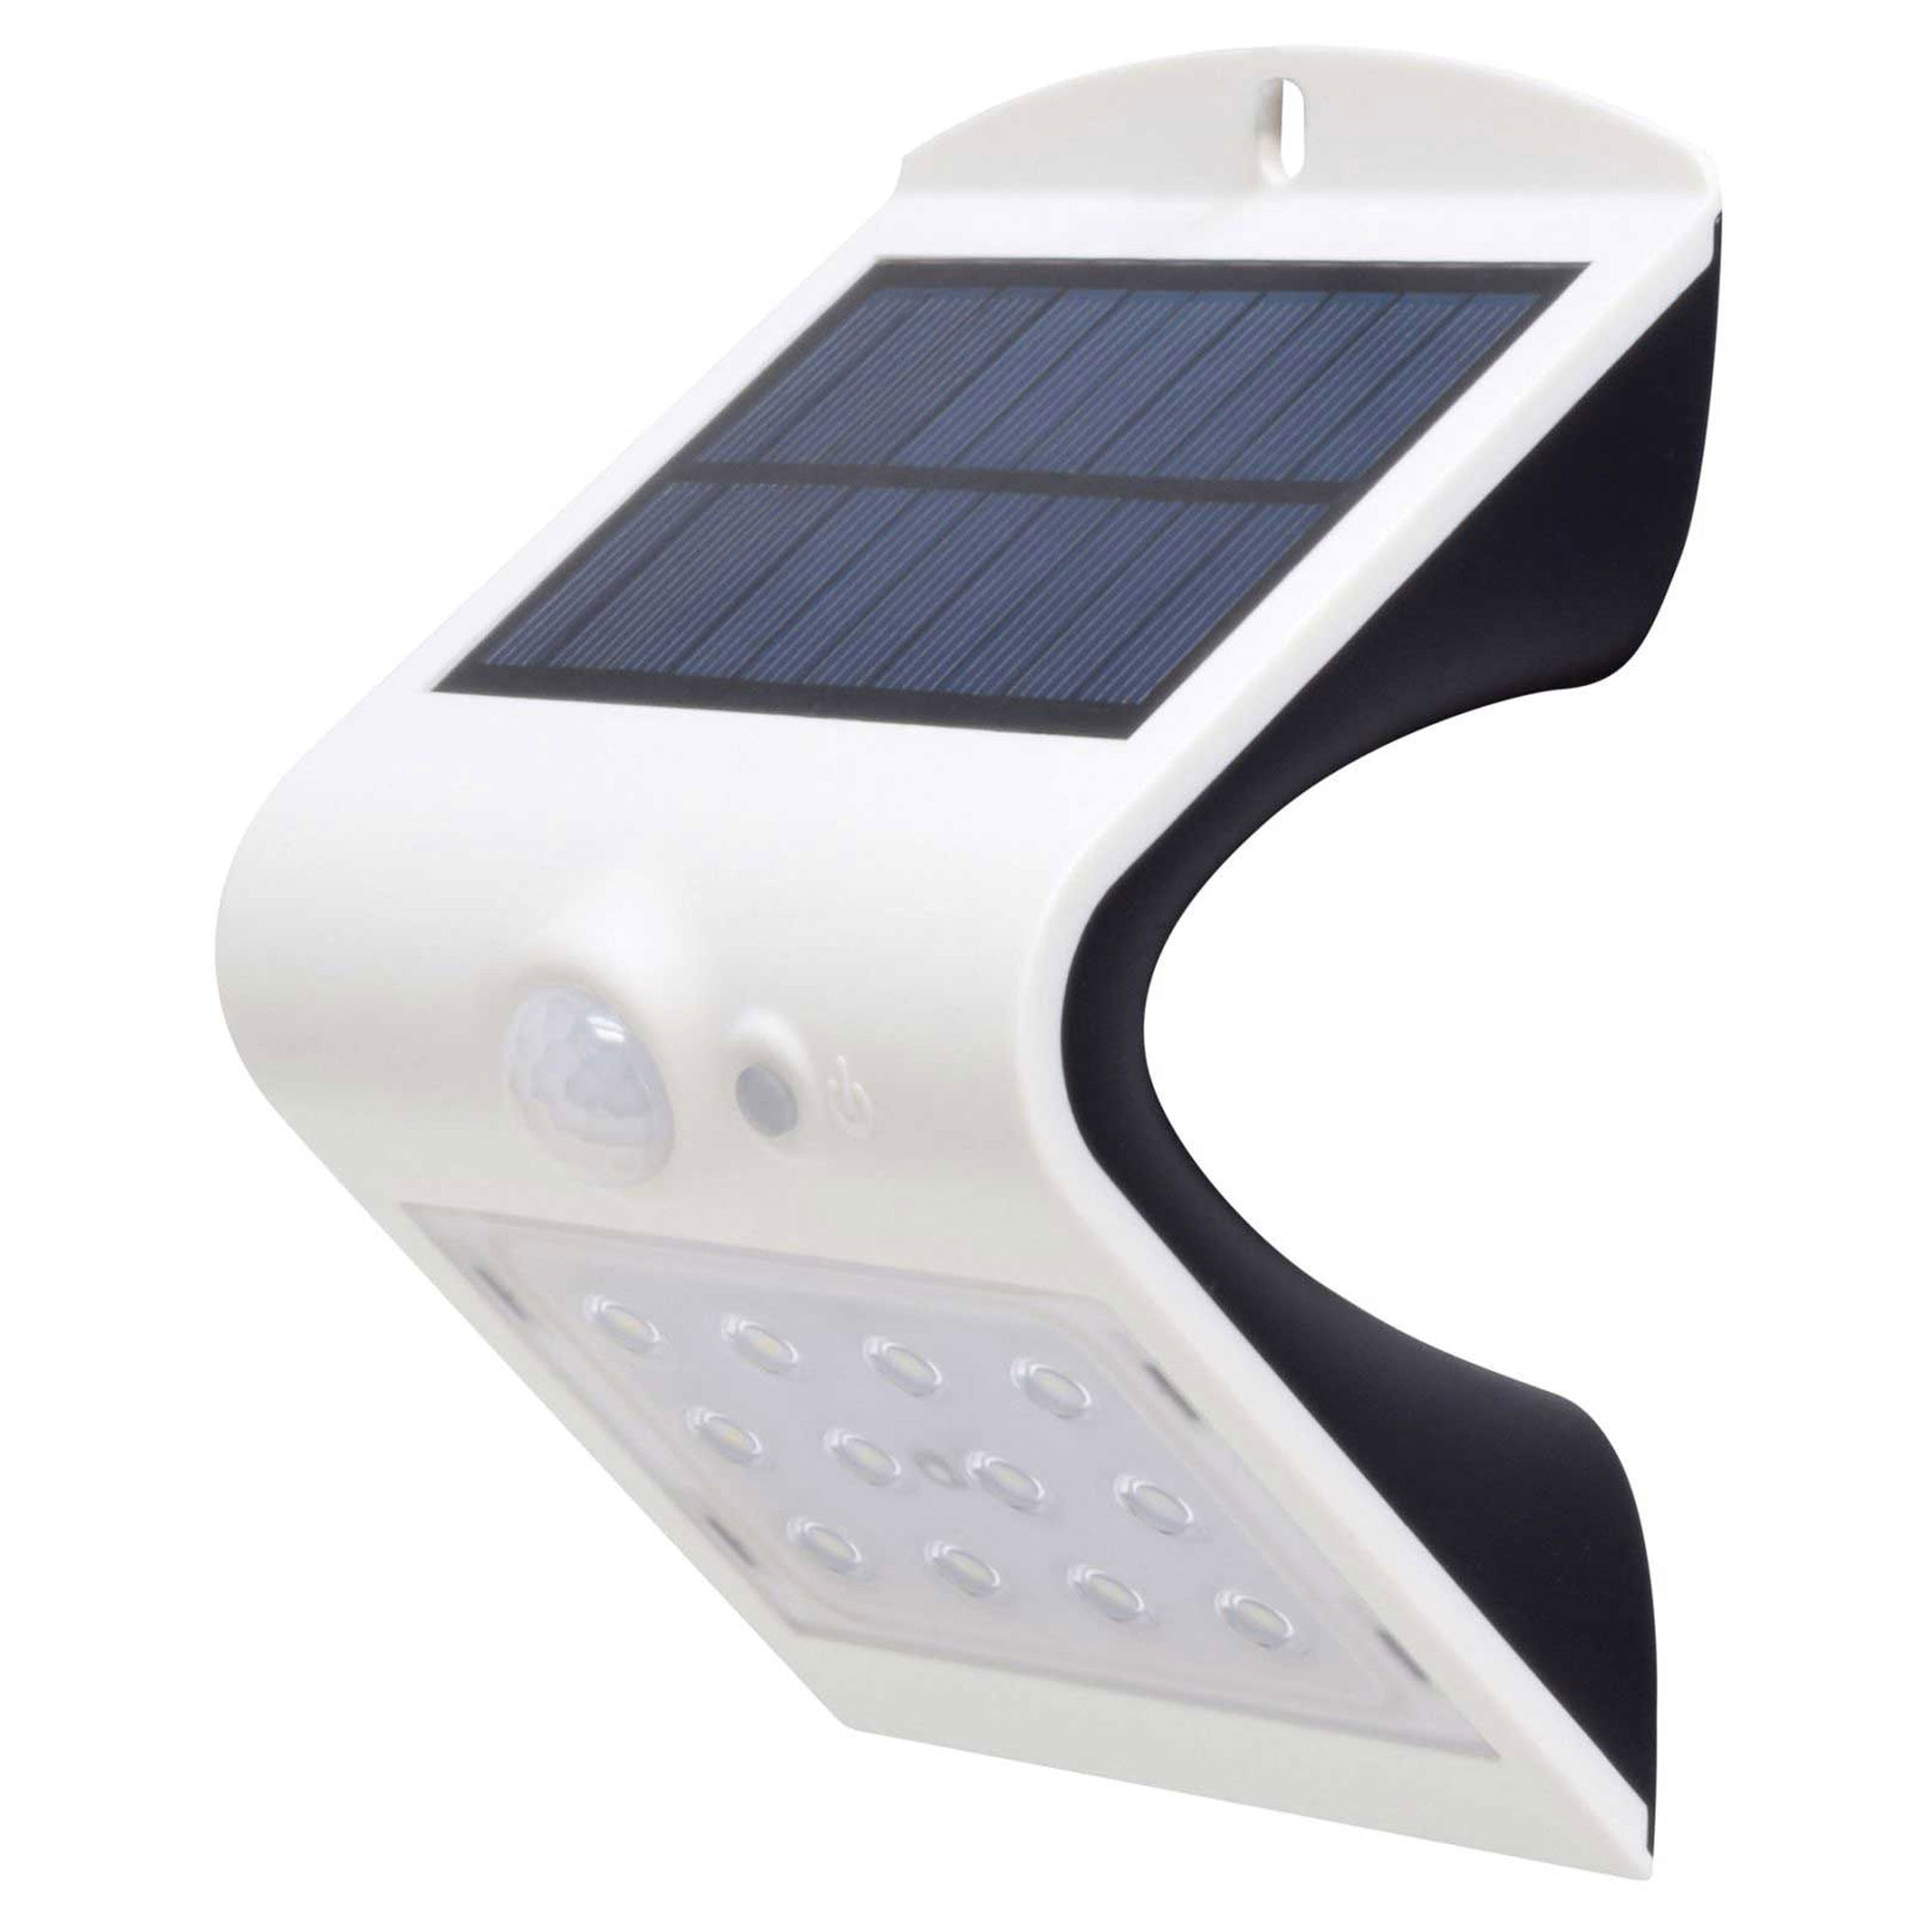 DG0115 Valterra Solar Led Wall Light With Built-In Motion Sensor - 1.5 Watt, 200 Lumens, White